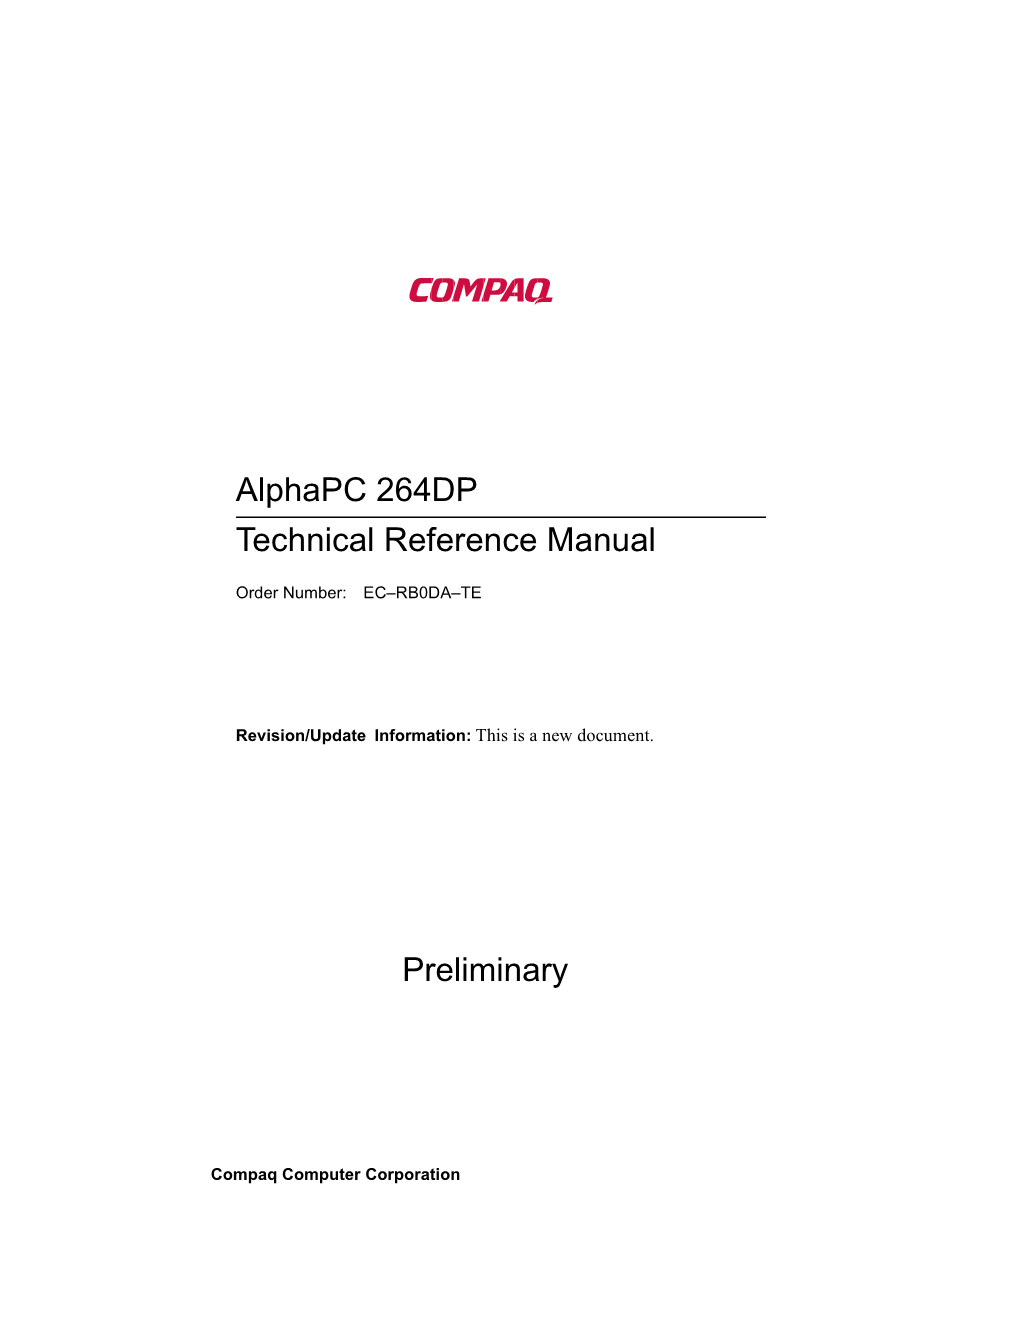 Alphapc 264DP Technical Reference Manual Preliminary